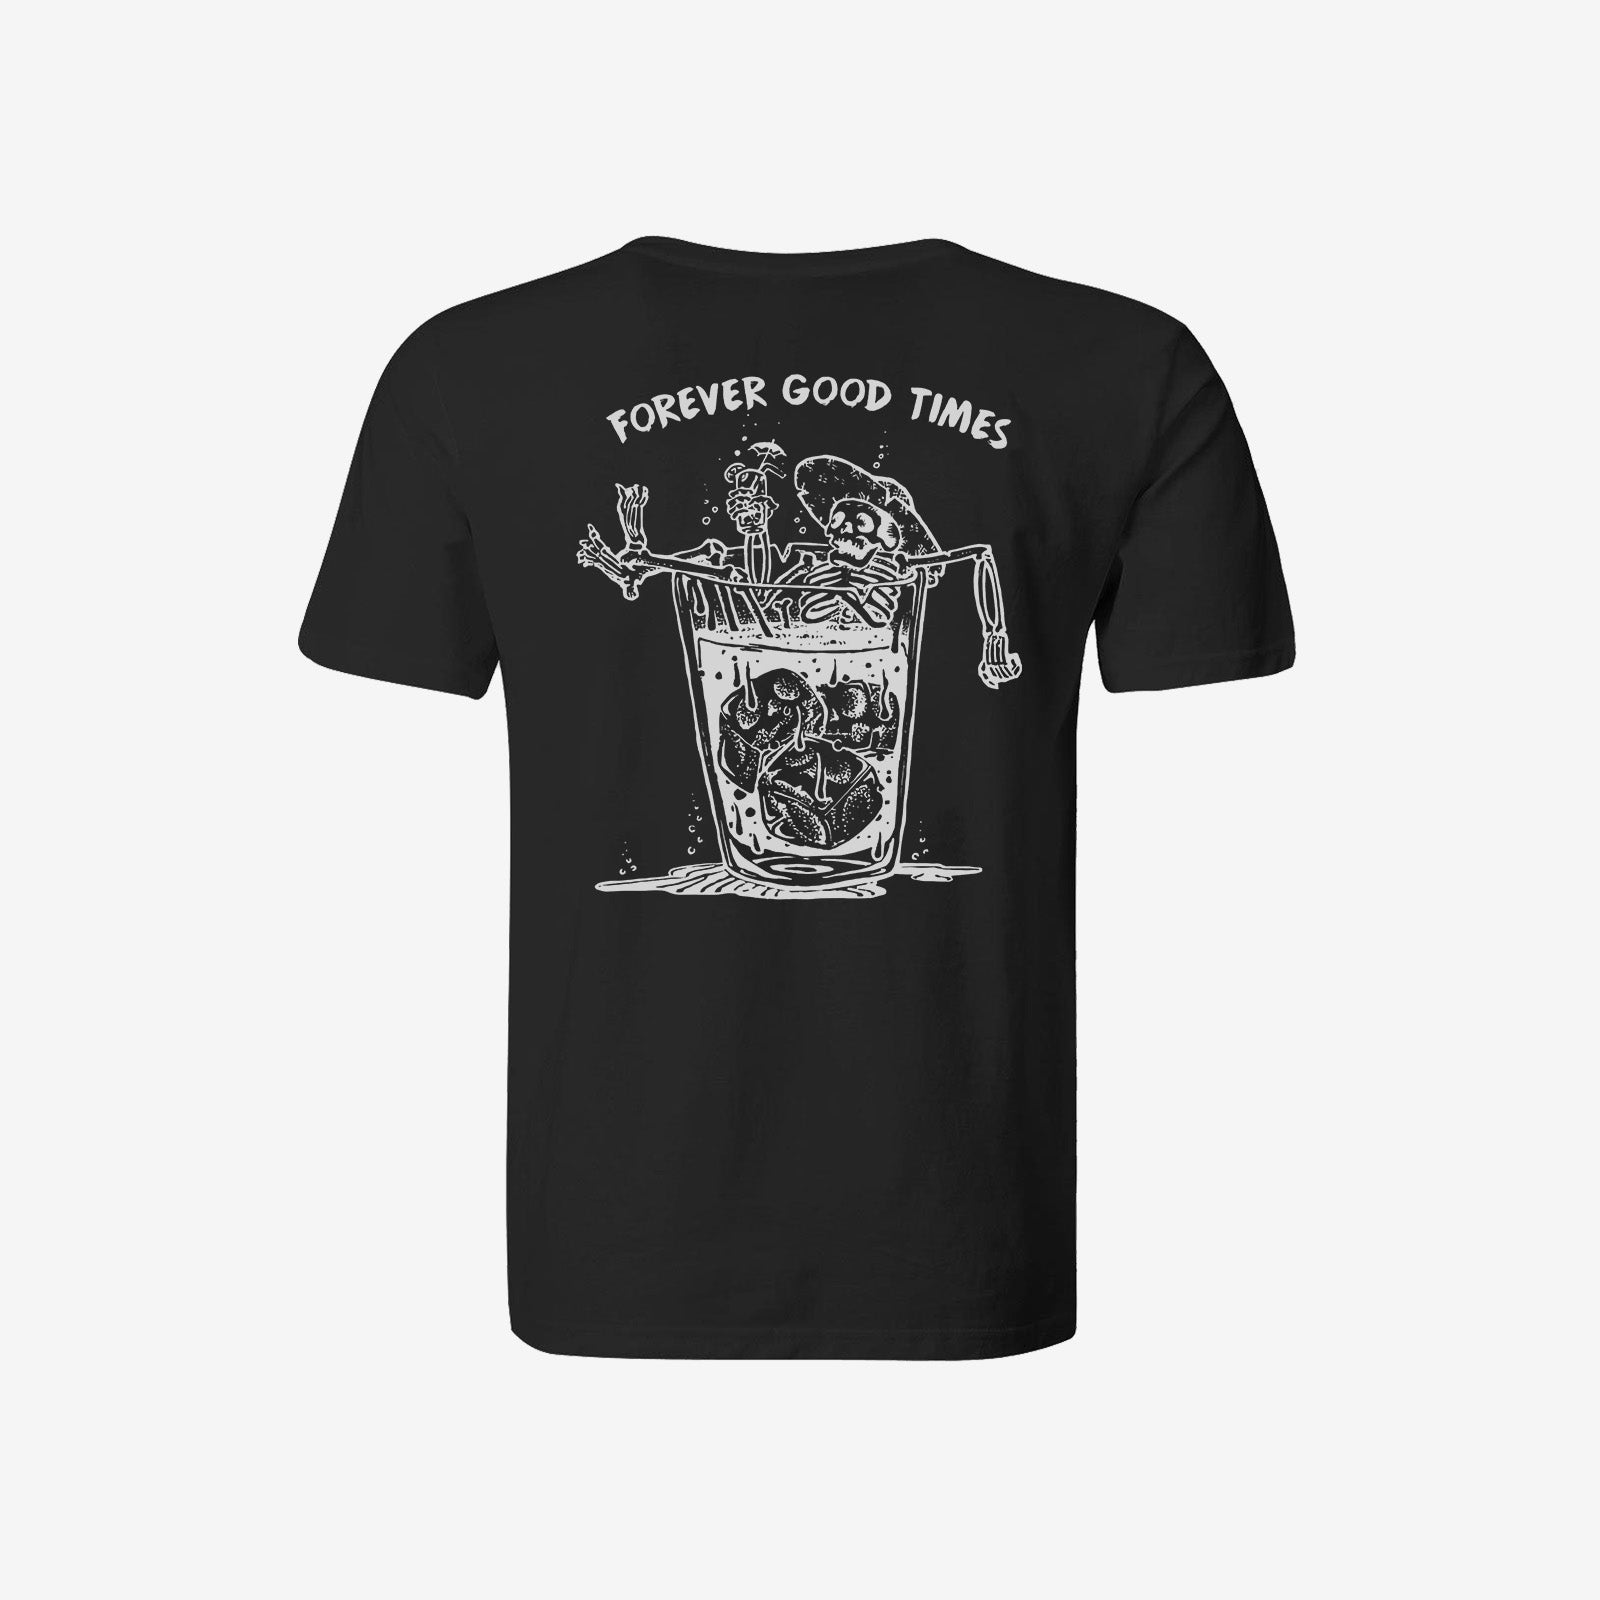 Uprandy Skull Funny Printed Black T-Shirt - chicyea